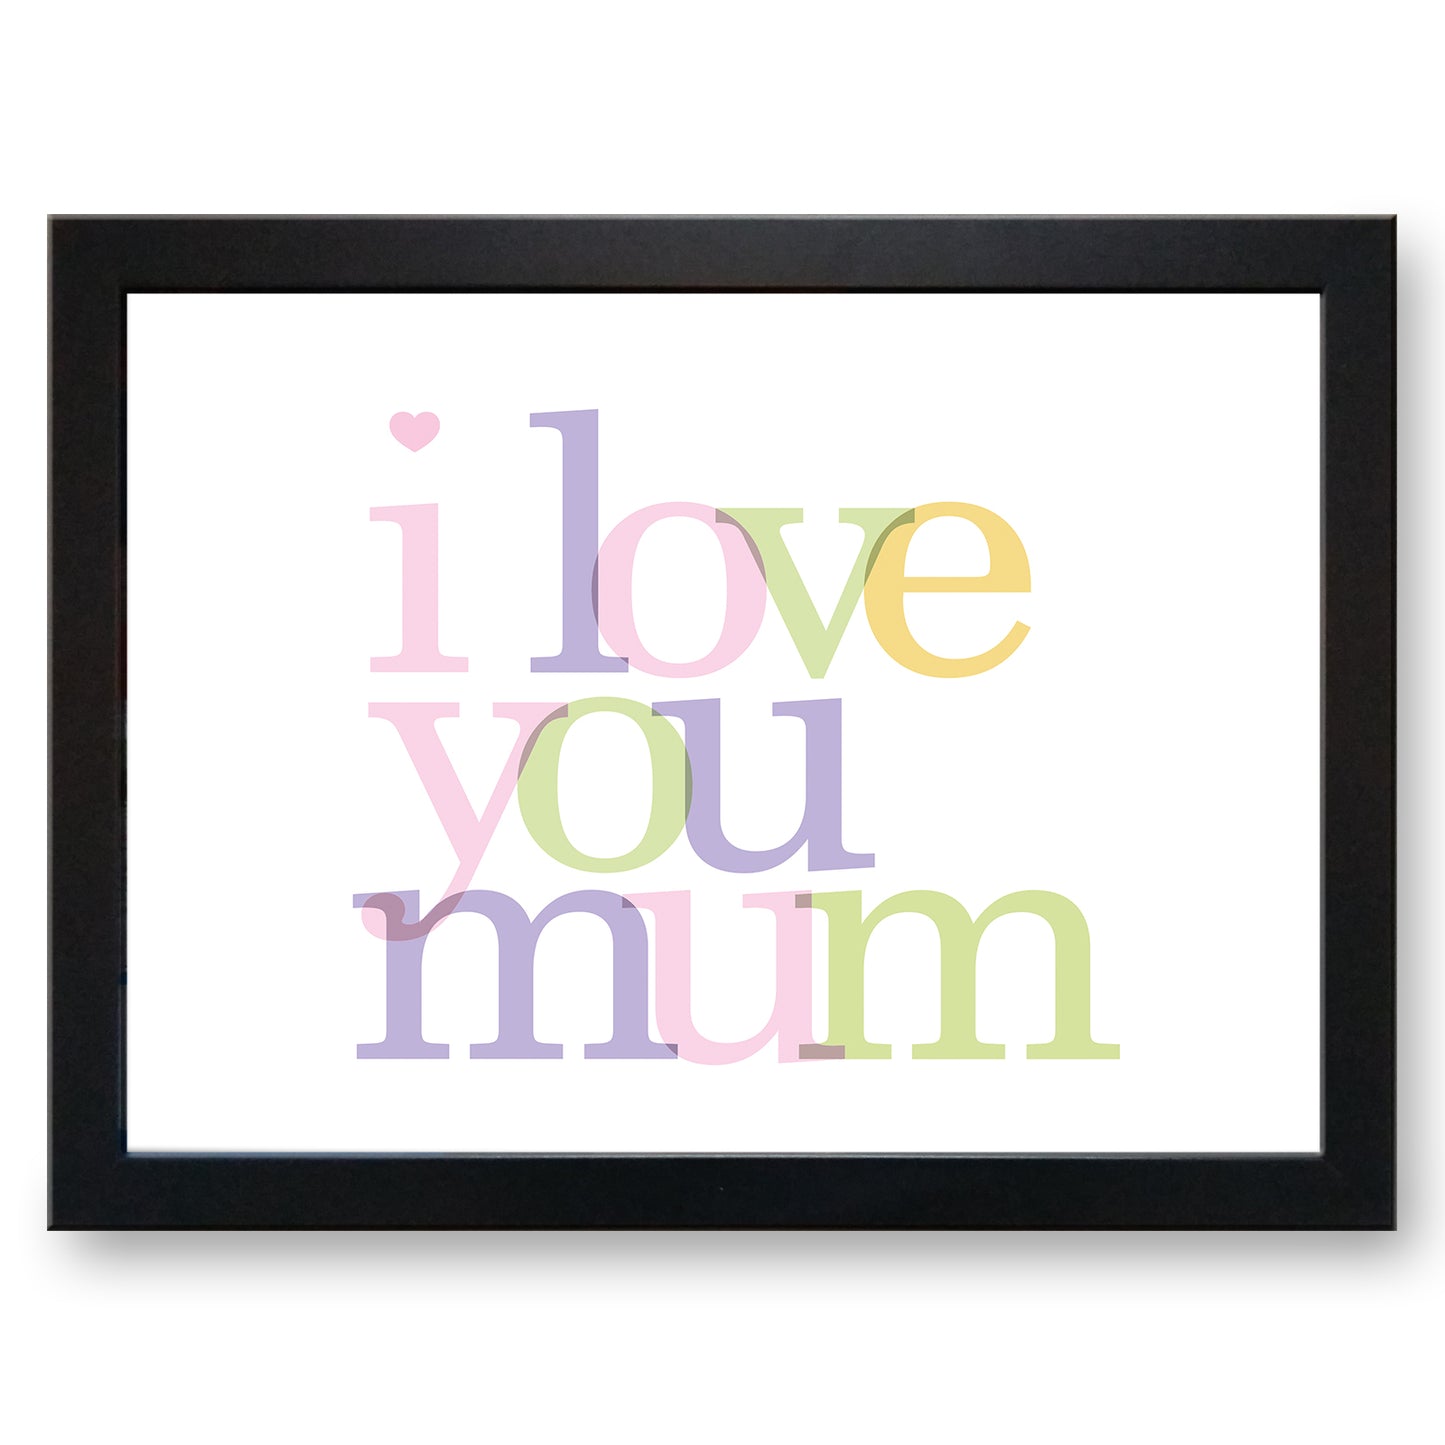 I Love You Mum Cushioned Lap Tray